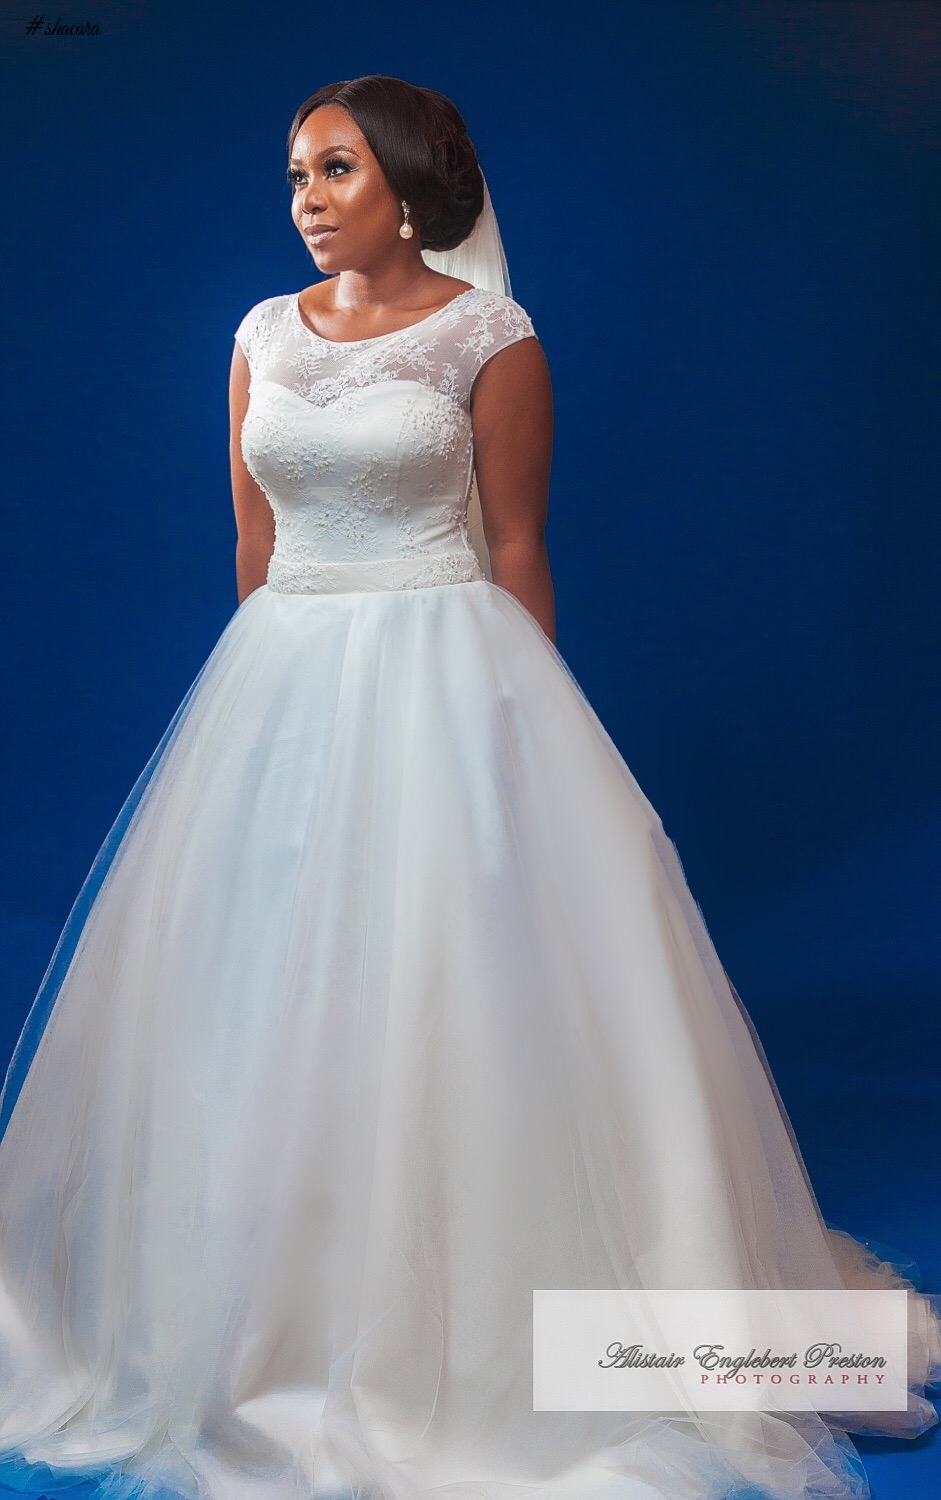 Mimi Onalaja Channels 4 Different Brides In The ‘Elizabeth & Lace Bridal X Wardrobe Manager’ Fashion Campaign